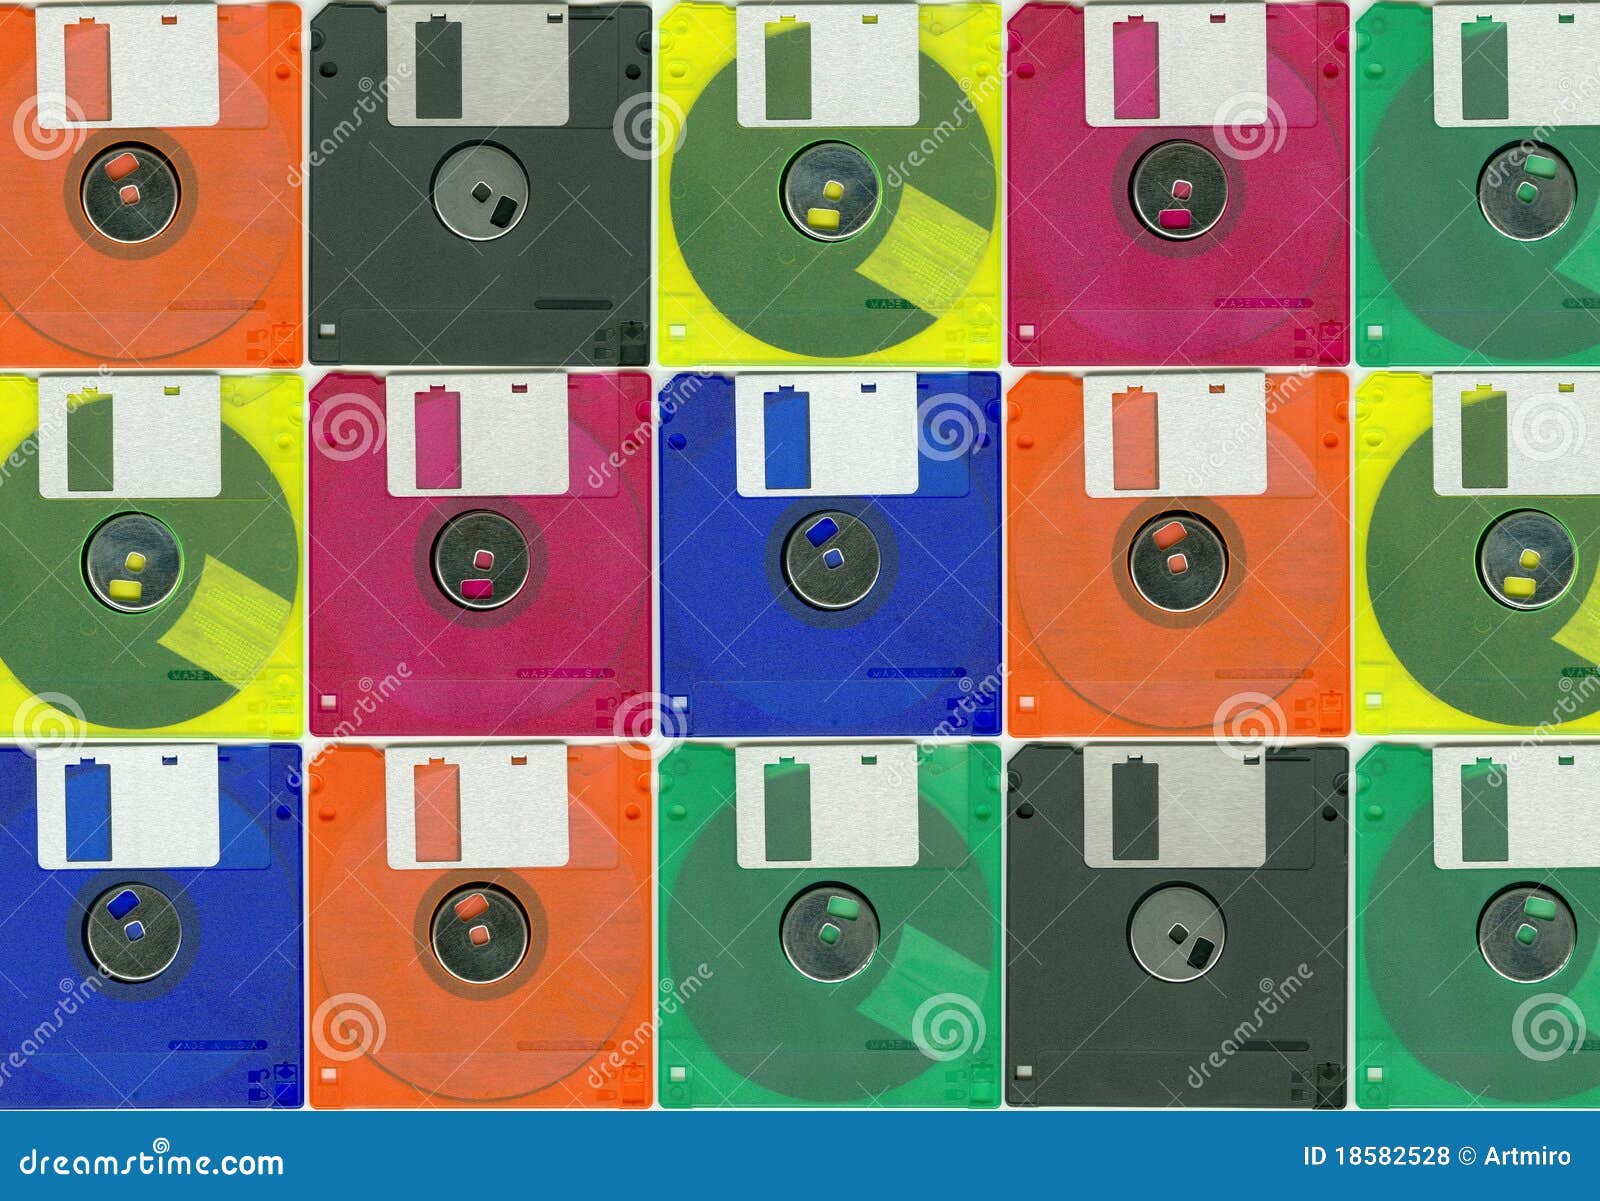 micro floppy disc color